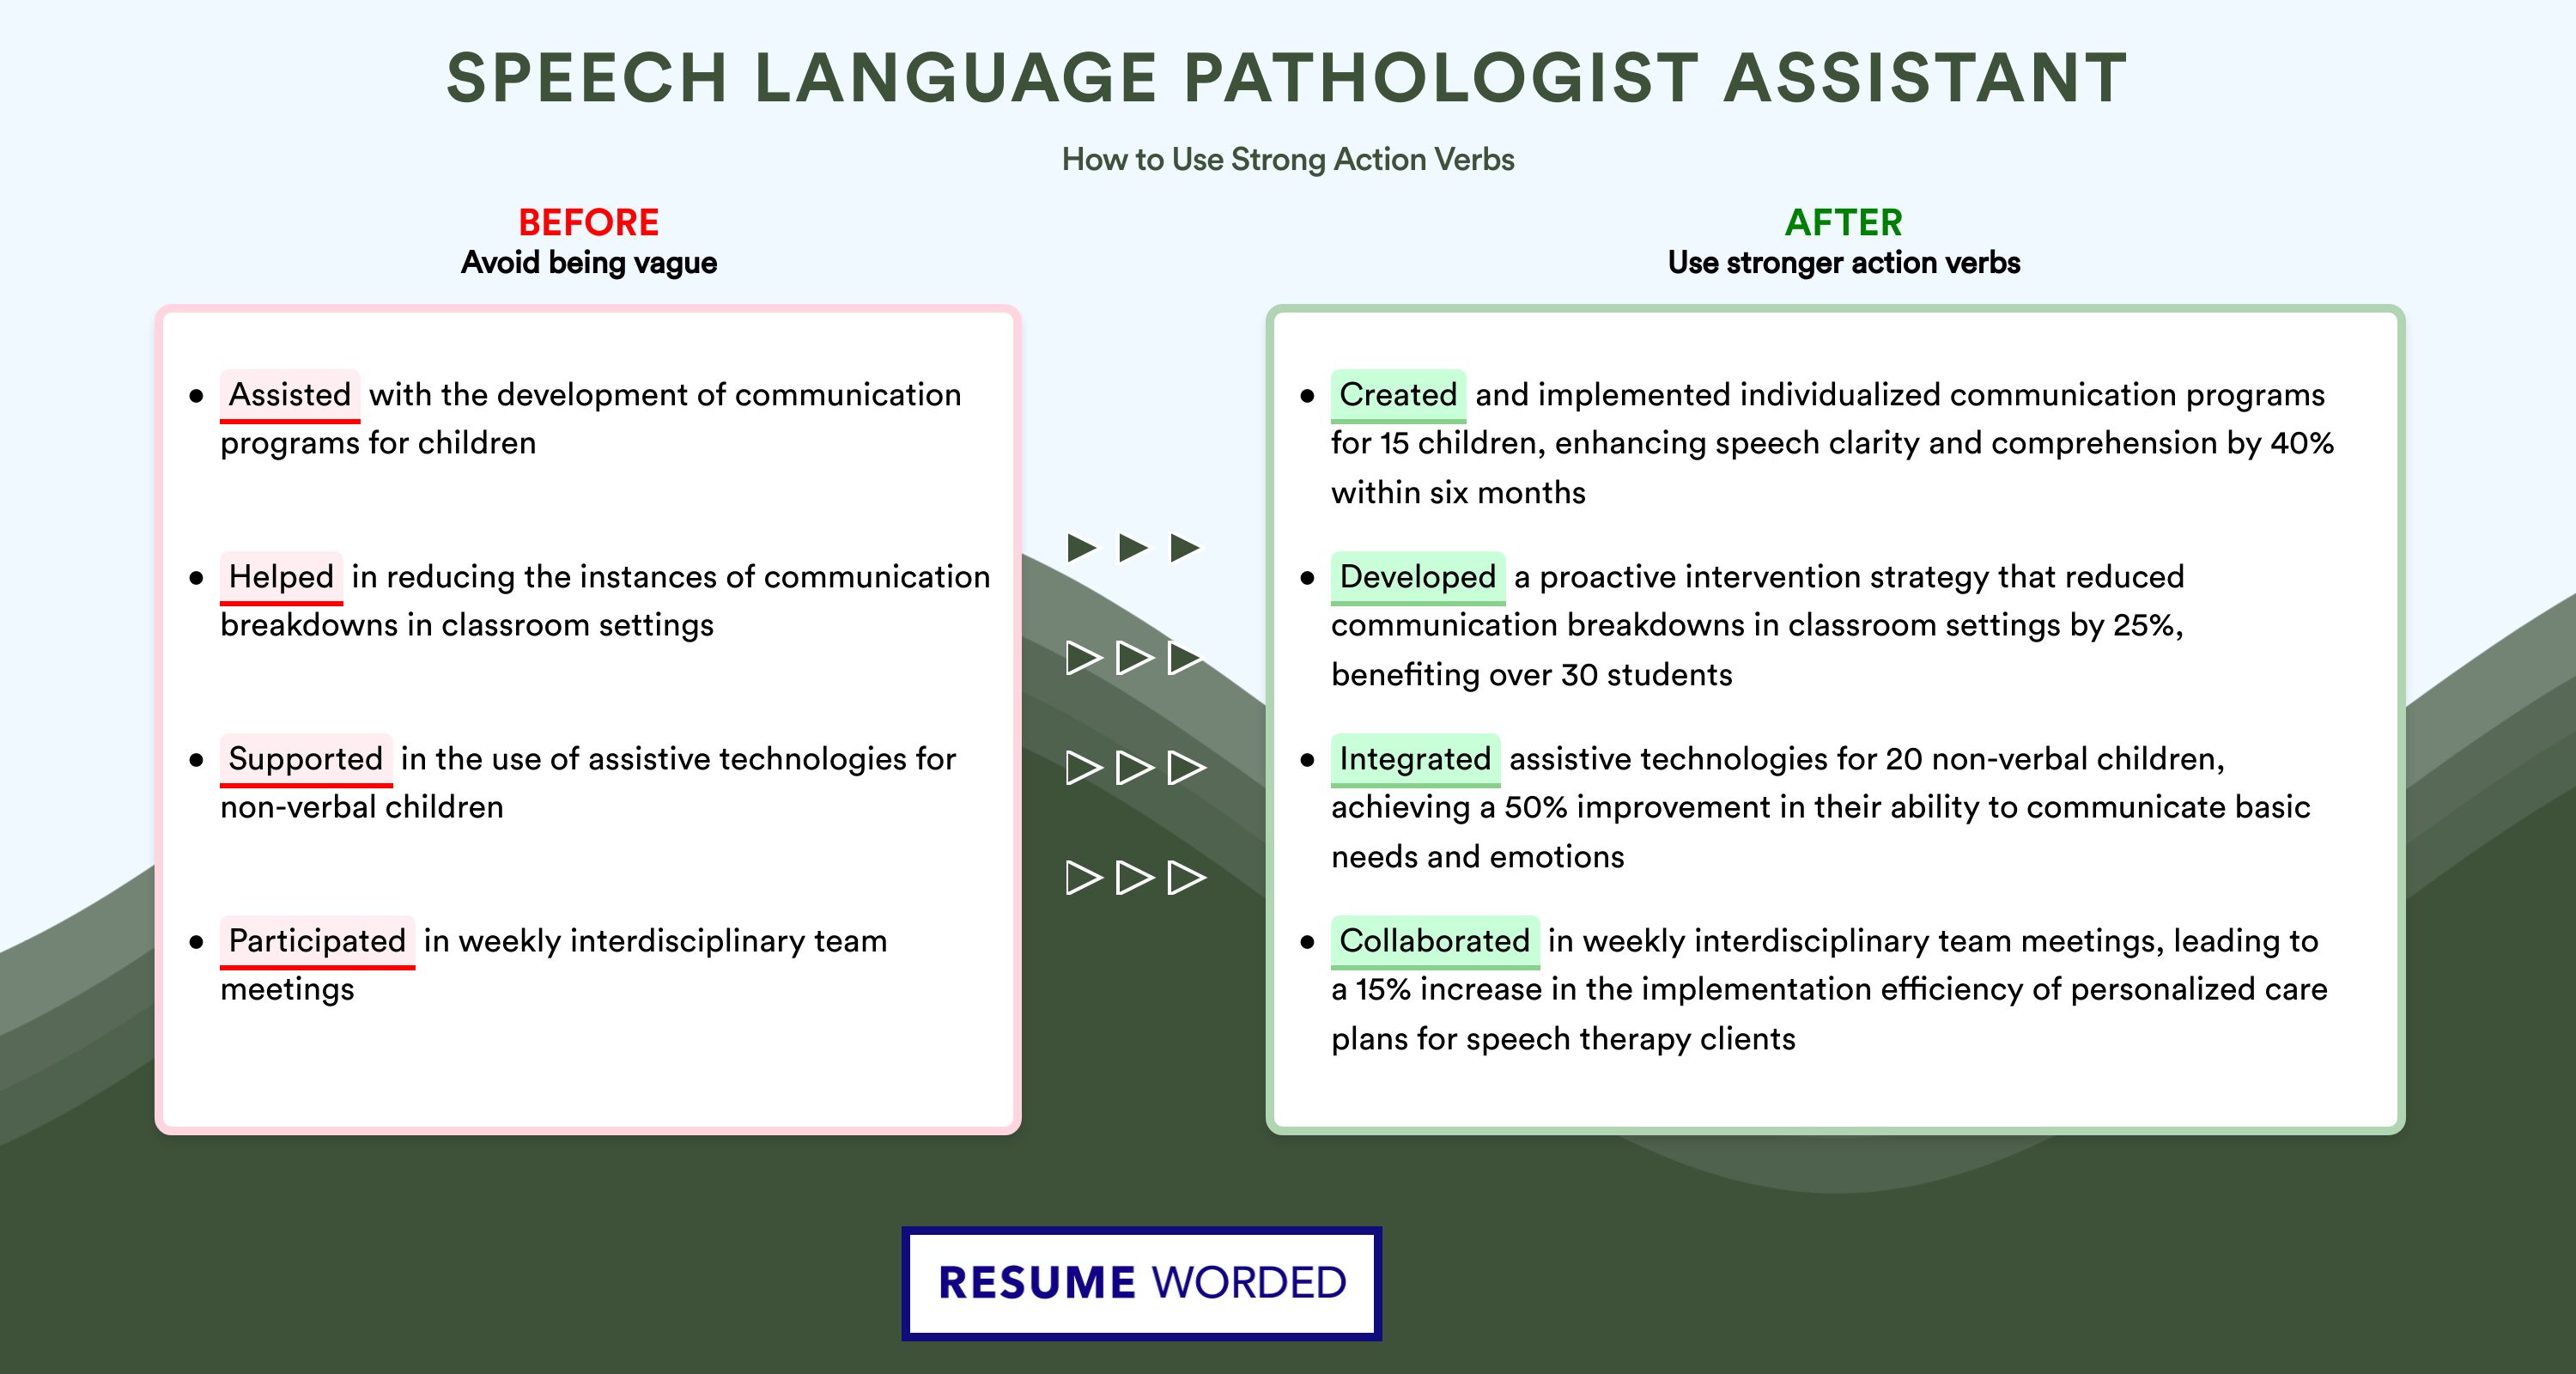 Action Verbs for Speech Language Pathologist Assistant